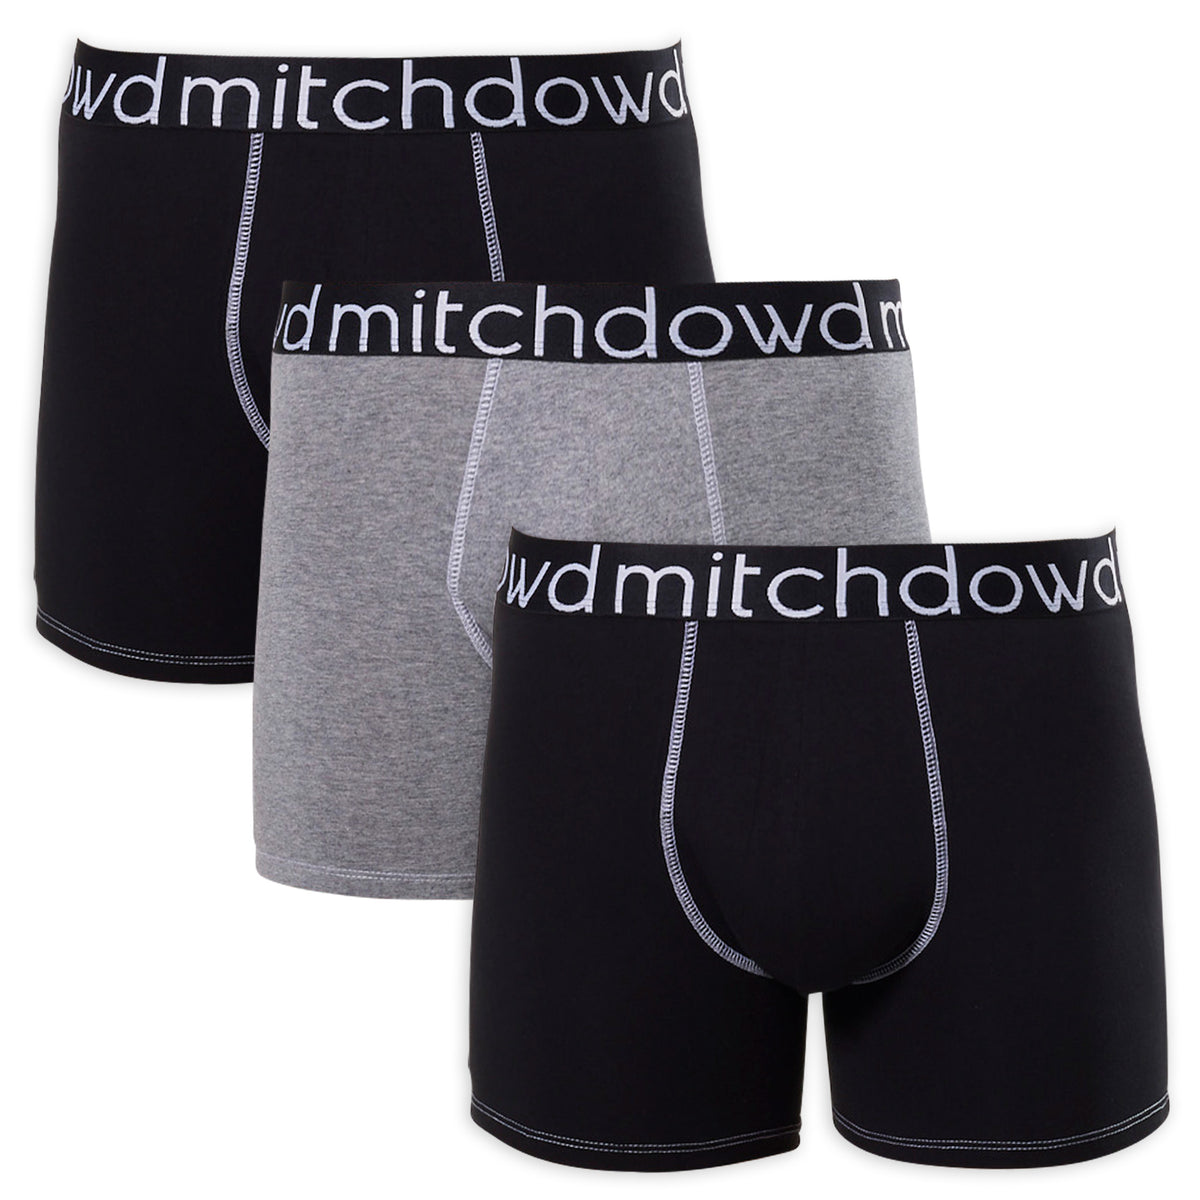 Mens Underwear & Boxers | Socks & Pyjamas for Men | Mitch Dowd